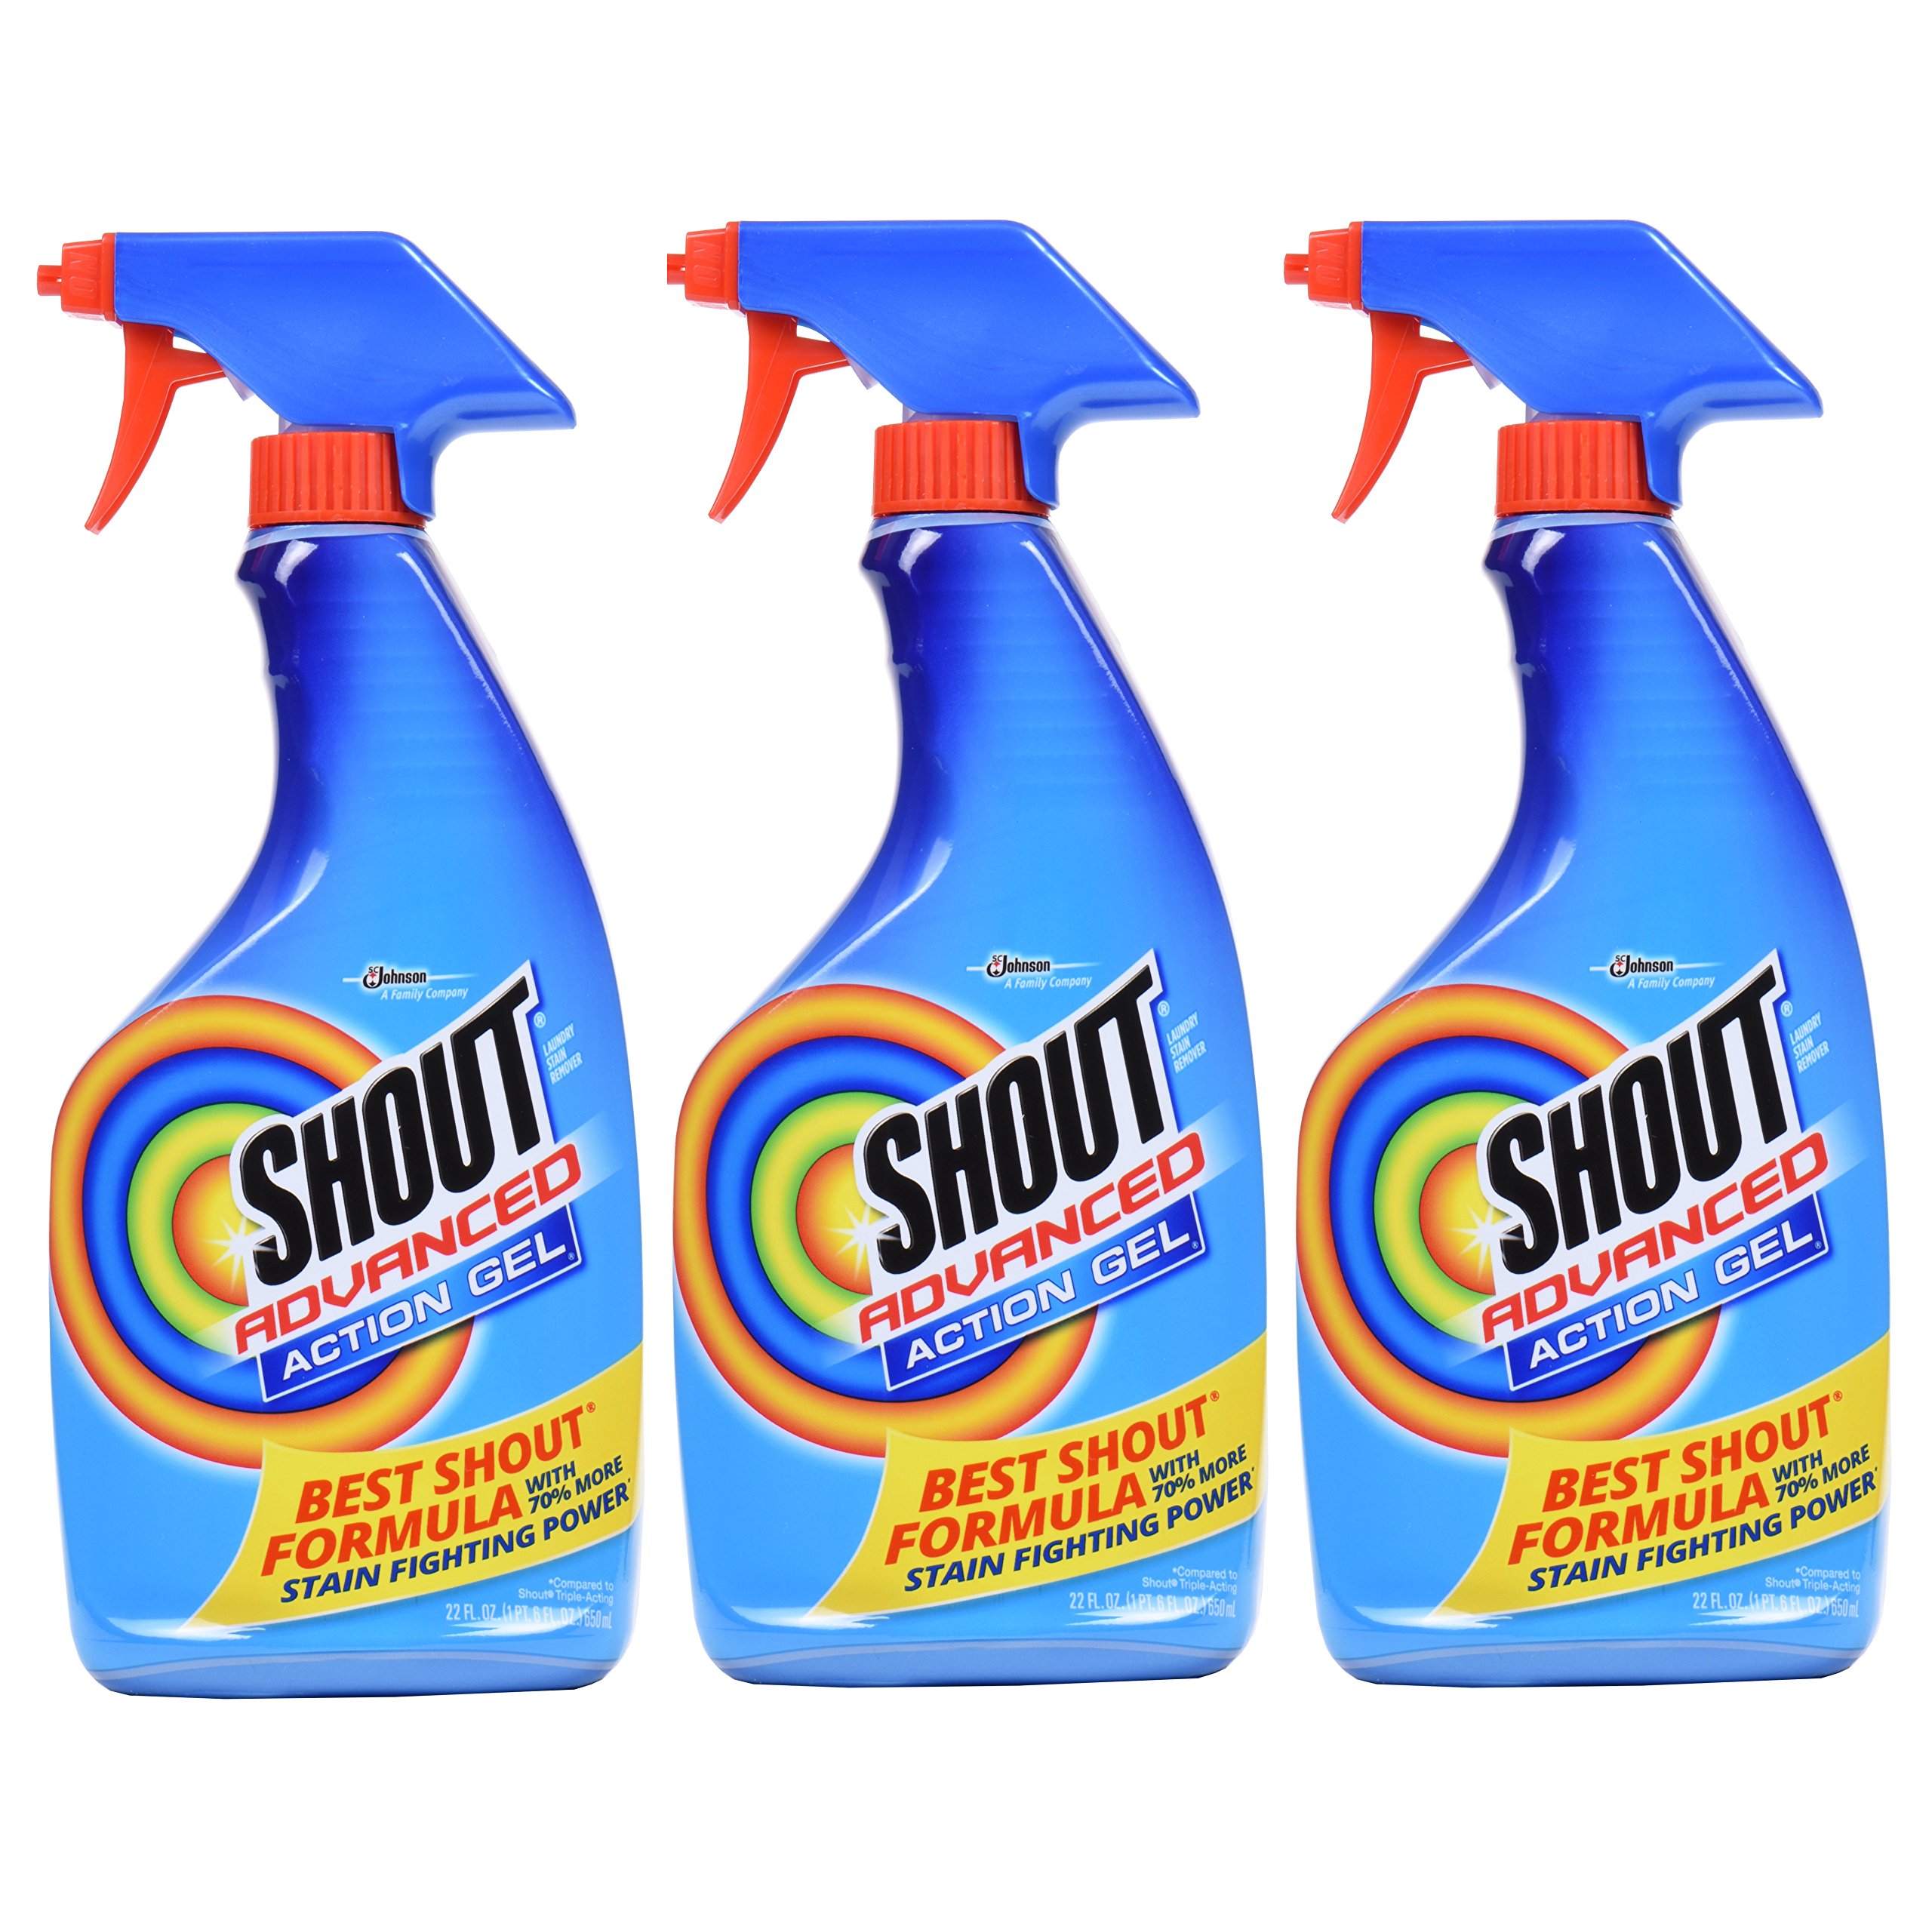 Spray 'N Wash Laundry Stain Remover - 22 fl oz